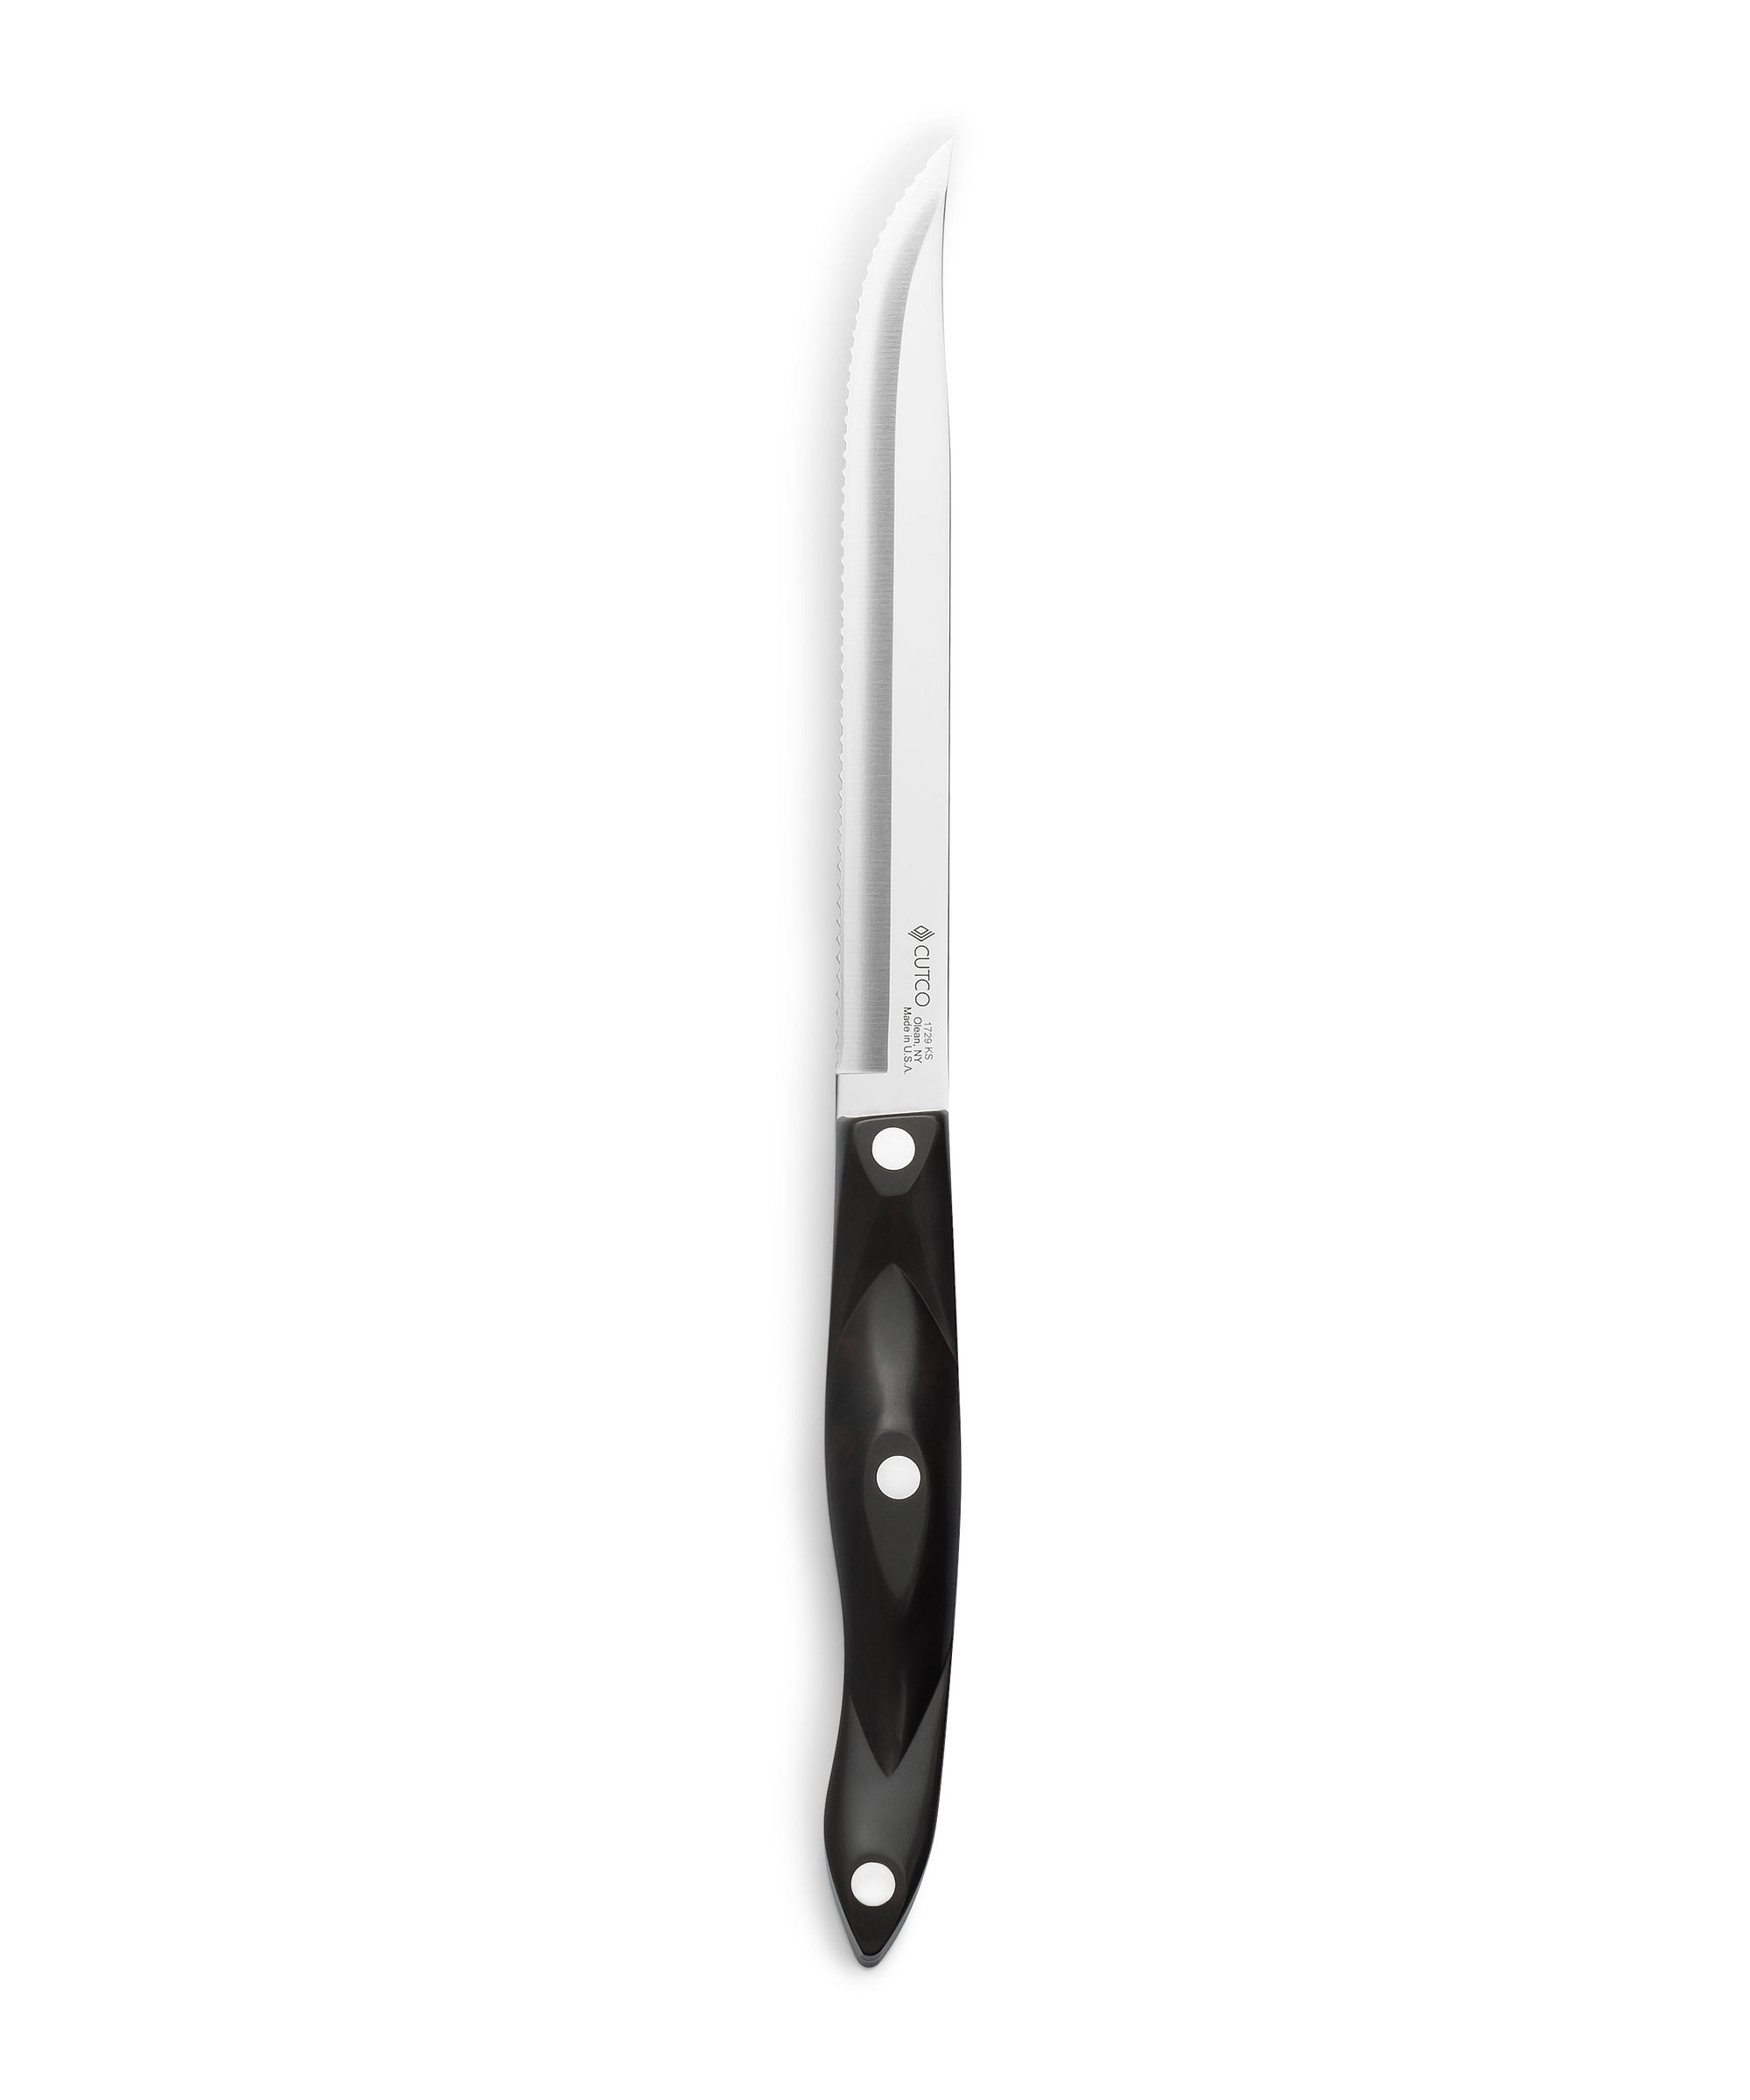 Cutco 1728 KD Petite Chef Butcher Chopping Carving Knife White 